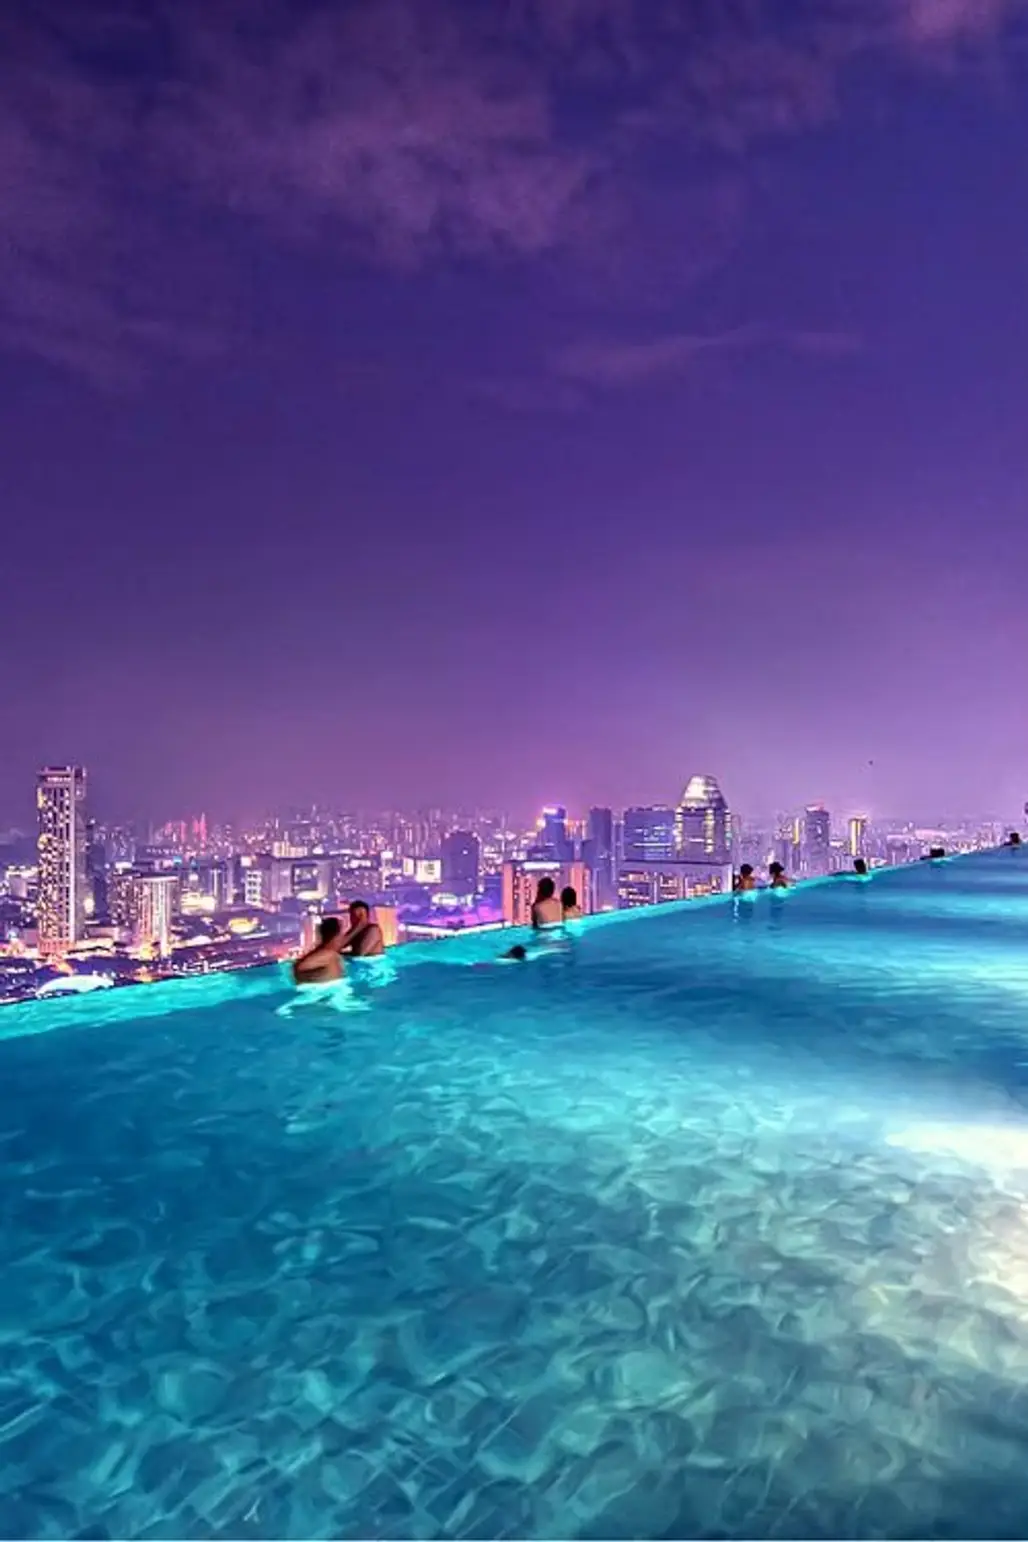 Marina Bay Sands Resort in Singapore